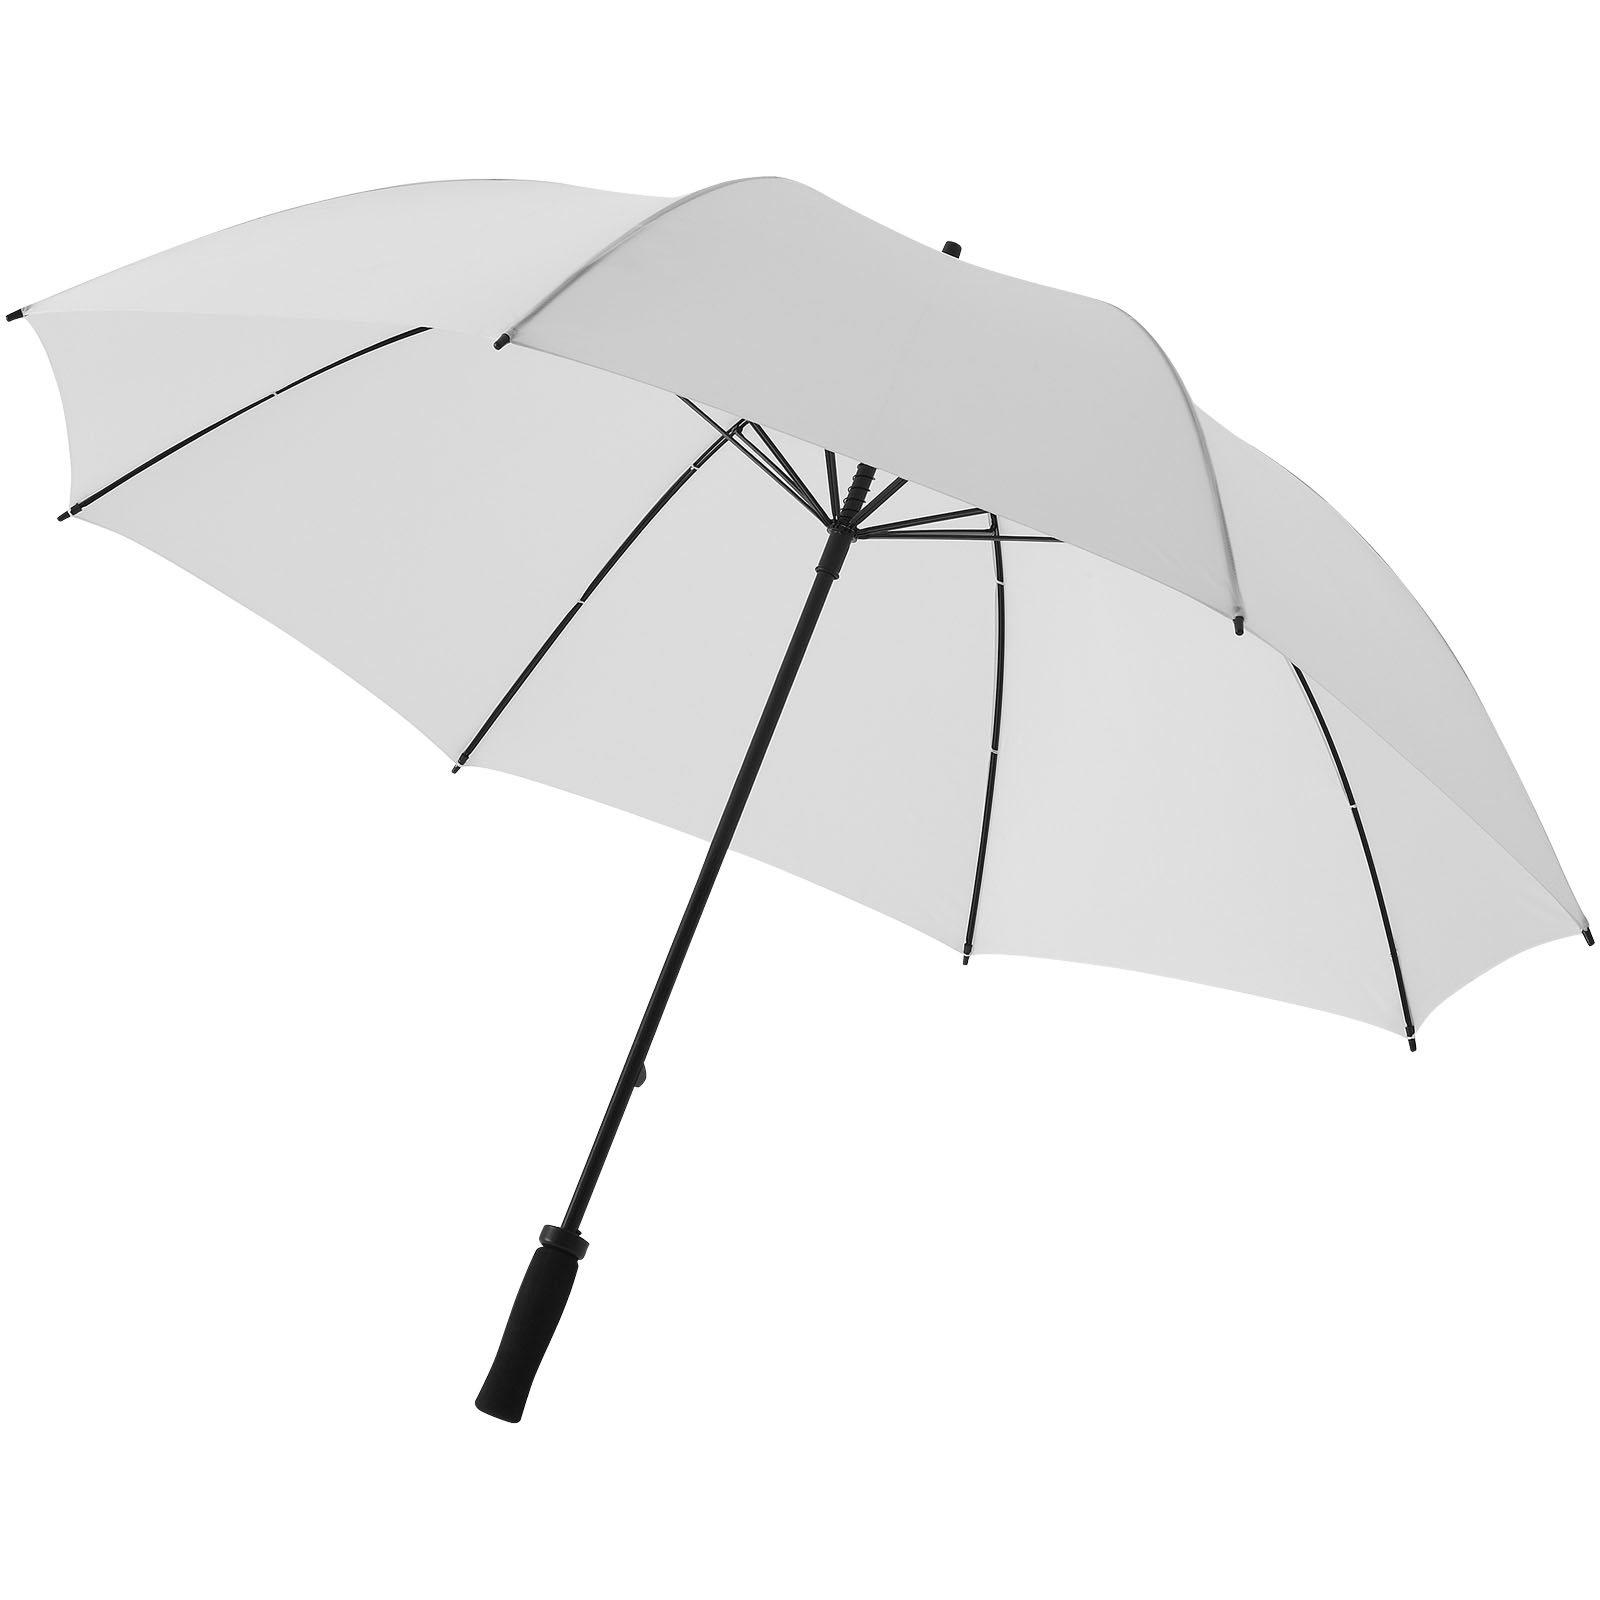 30" Yfke Umbrella for Two People - Biddenden